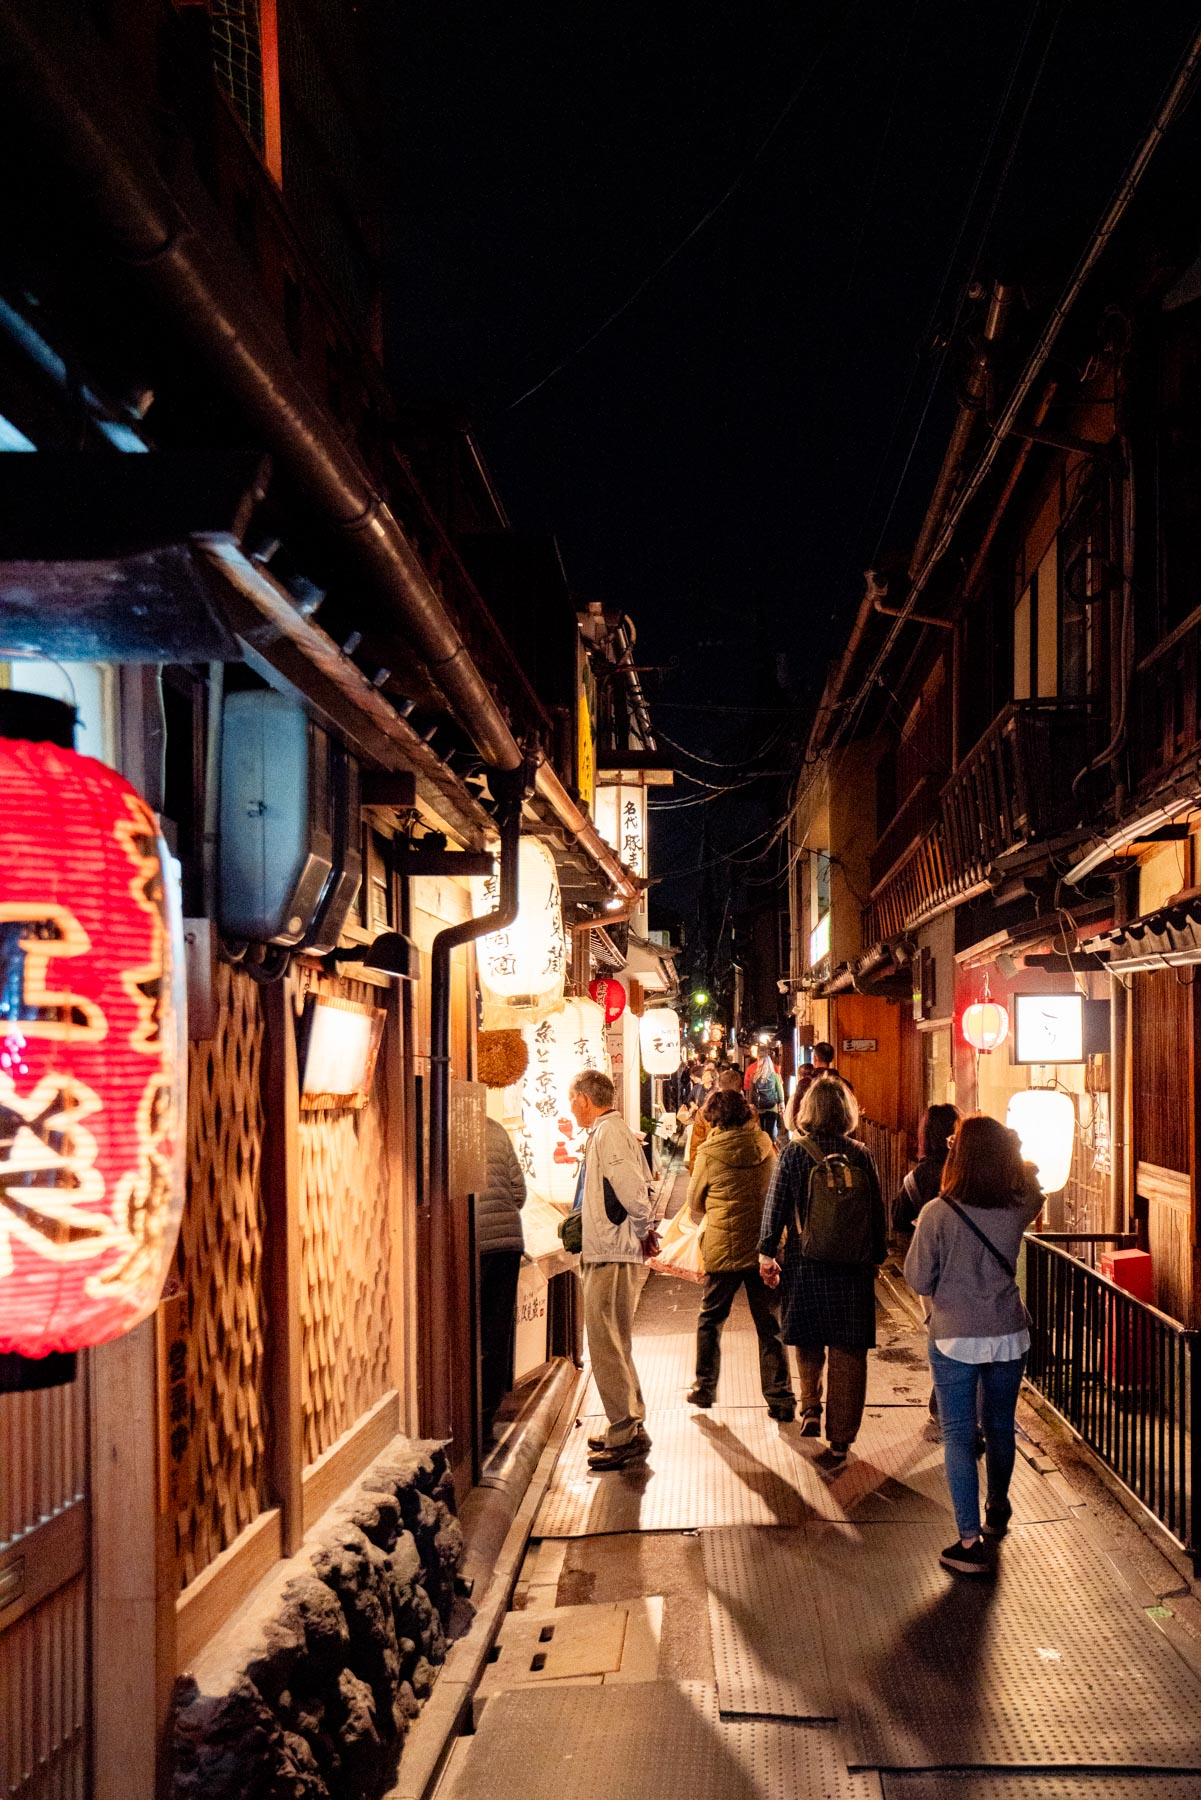 Pontocho Alley Kyoto at night